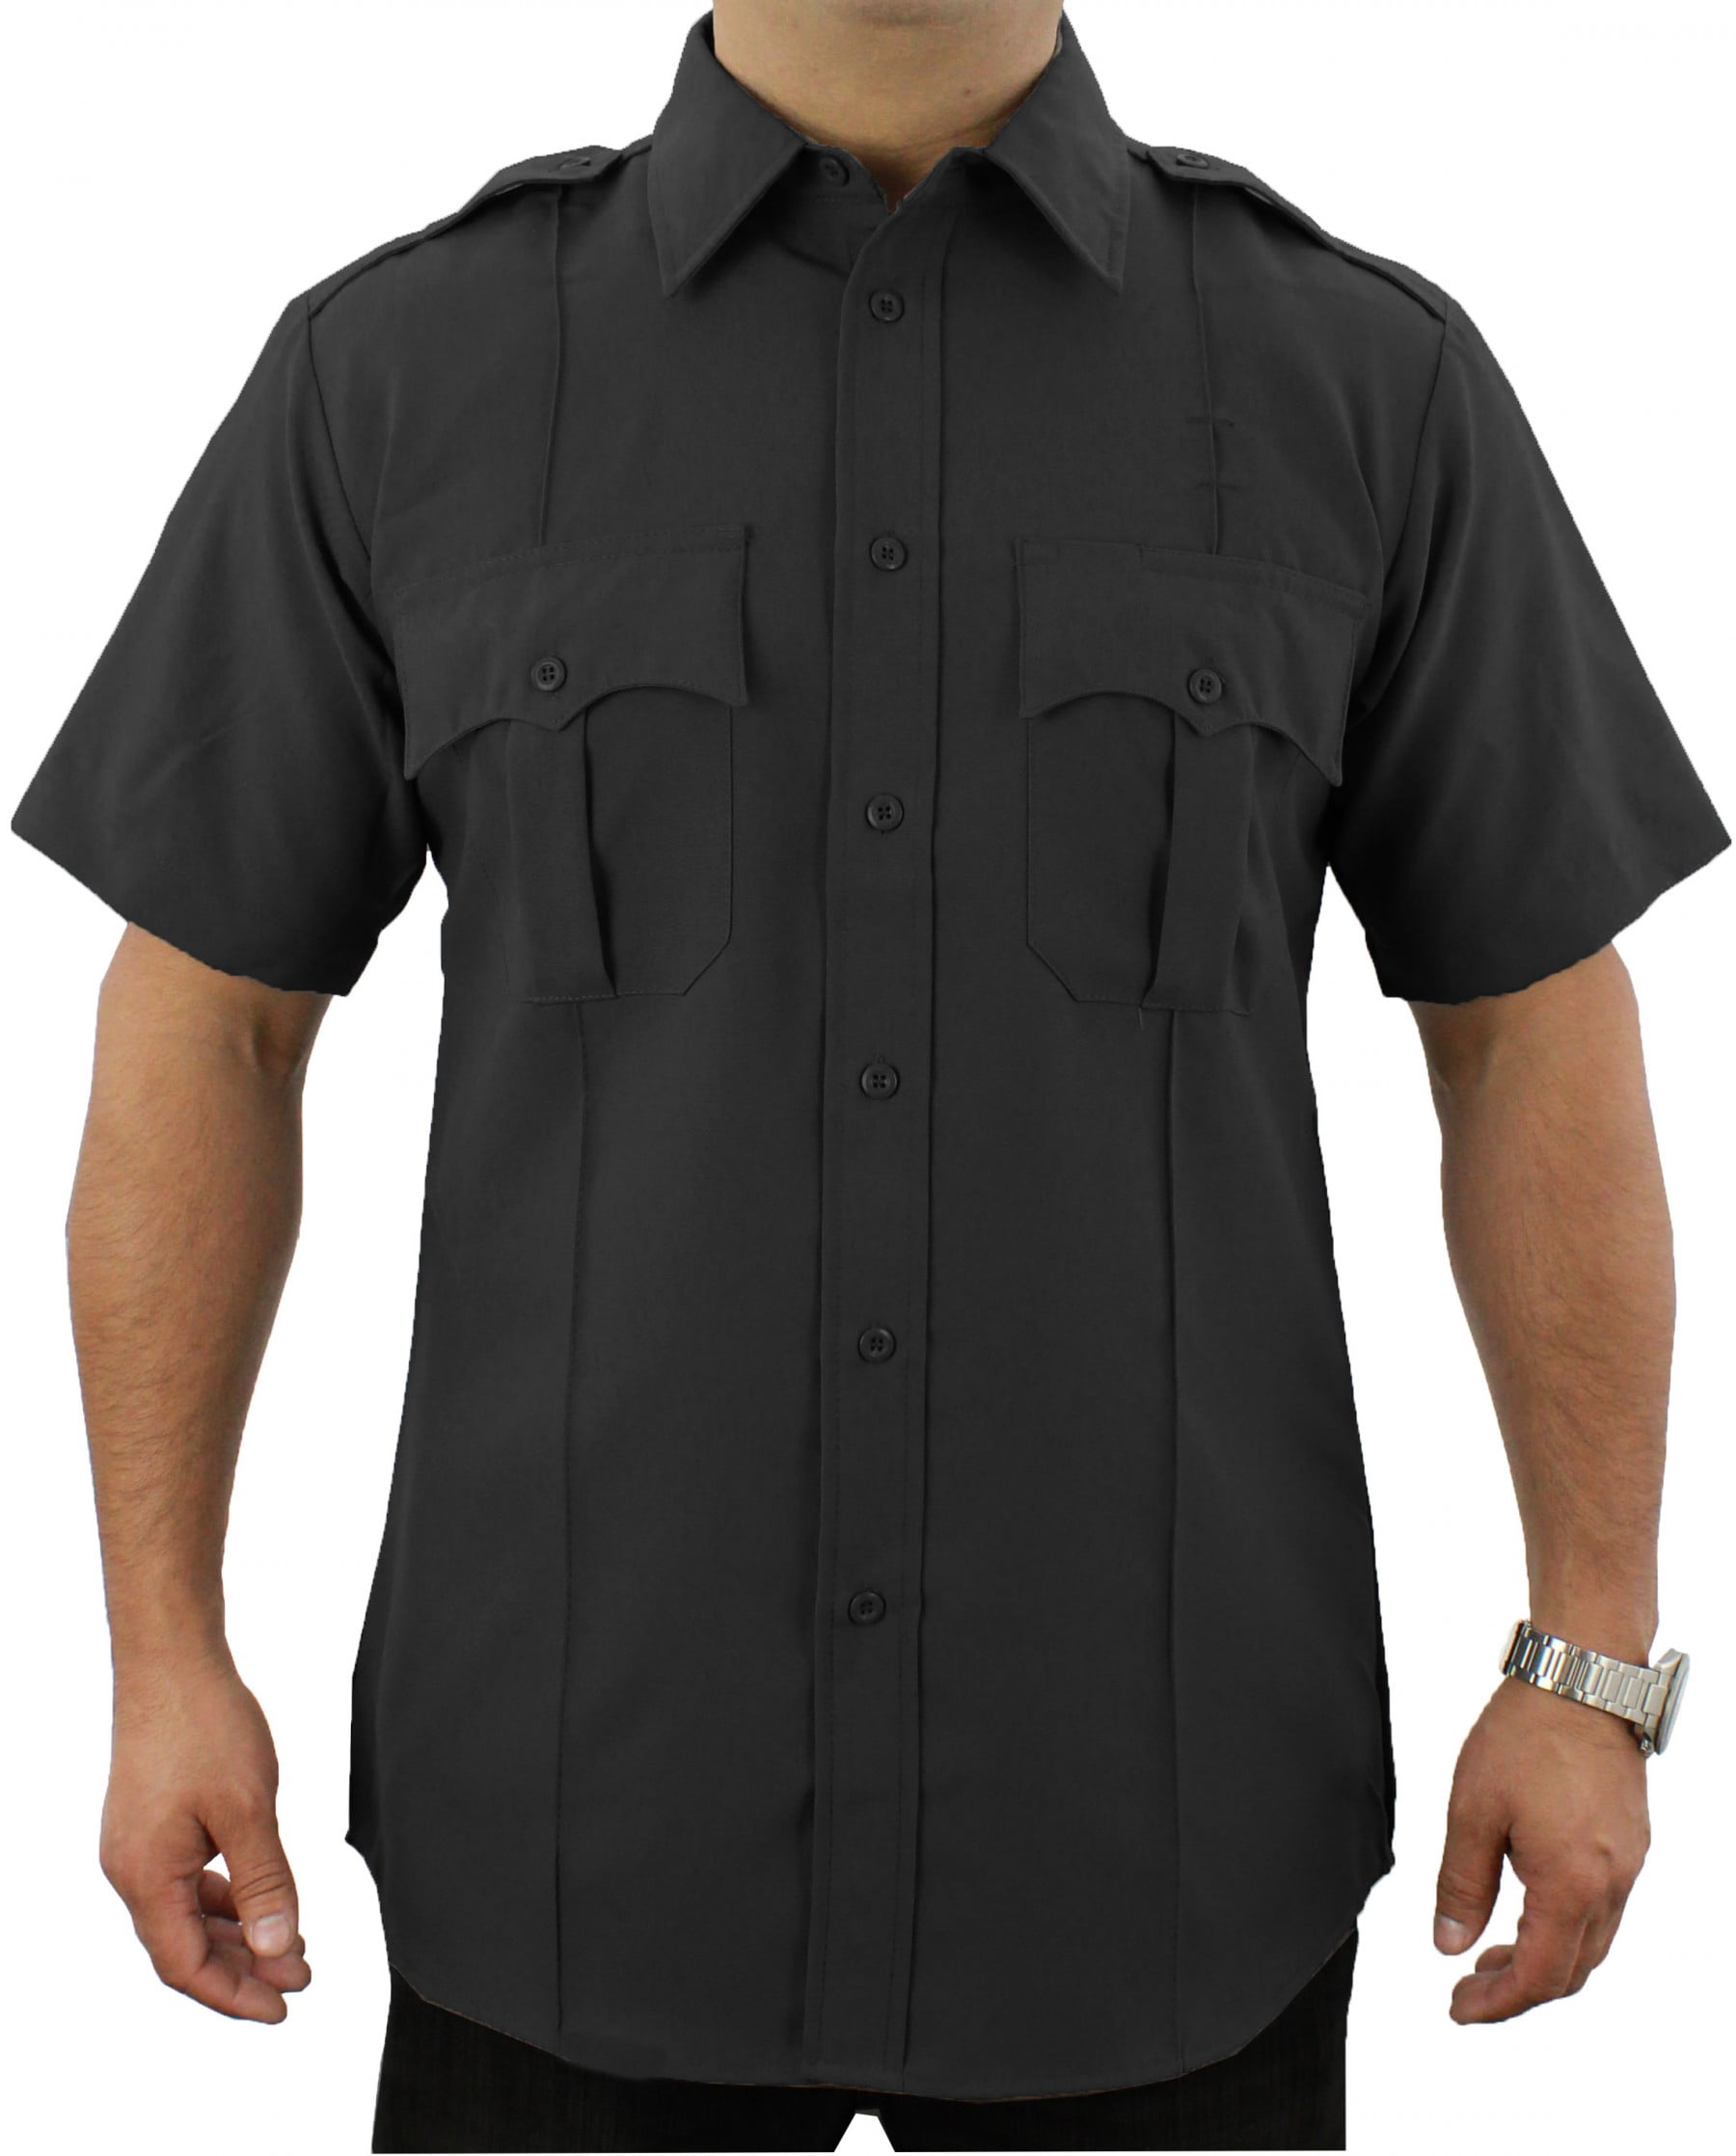 Large, Black First Class 100% Polyester Short-Sleeve Mens Uniform Shirt Black